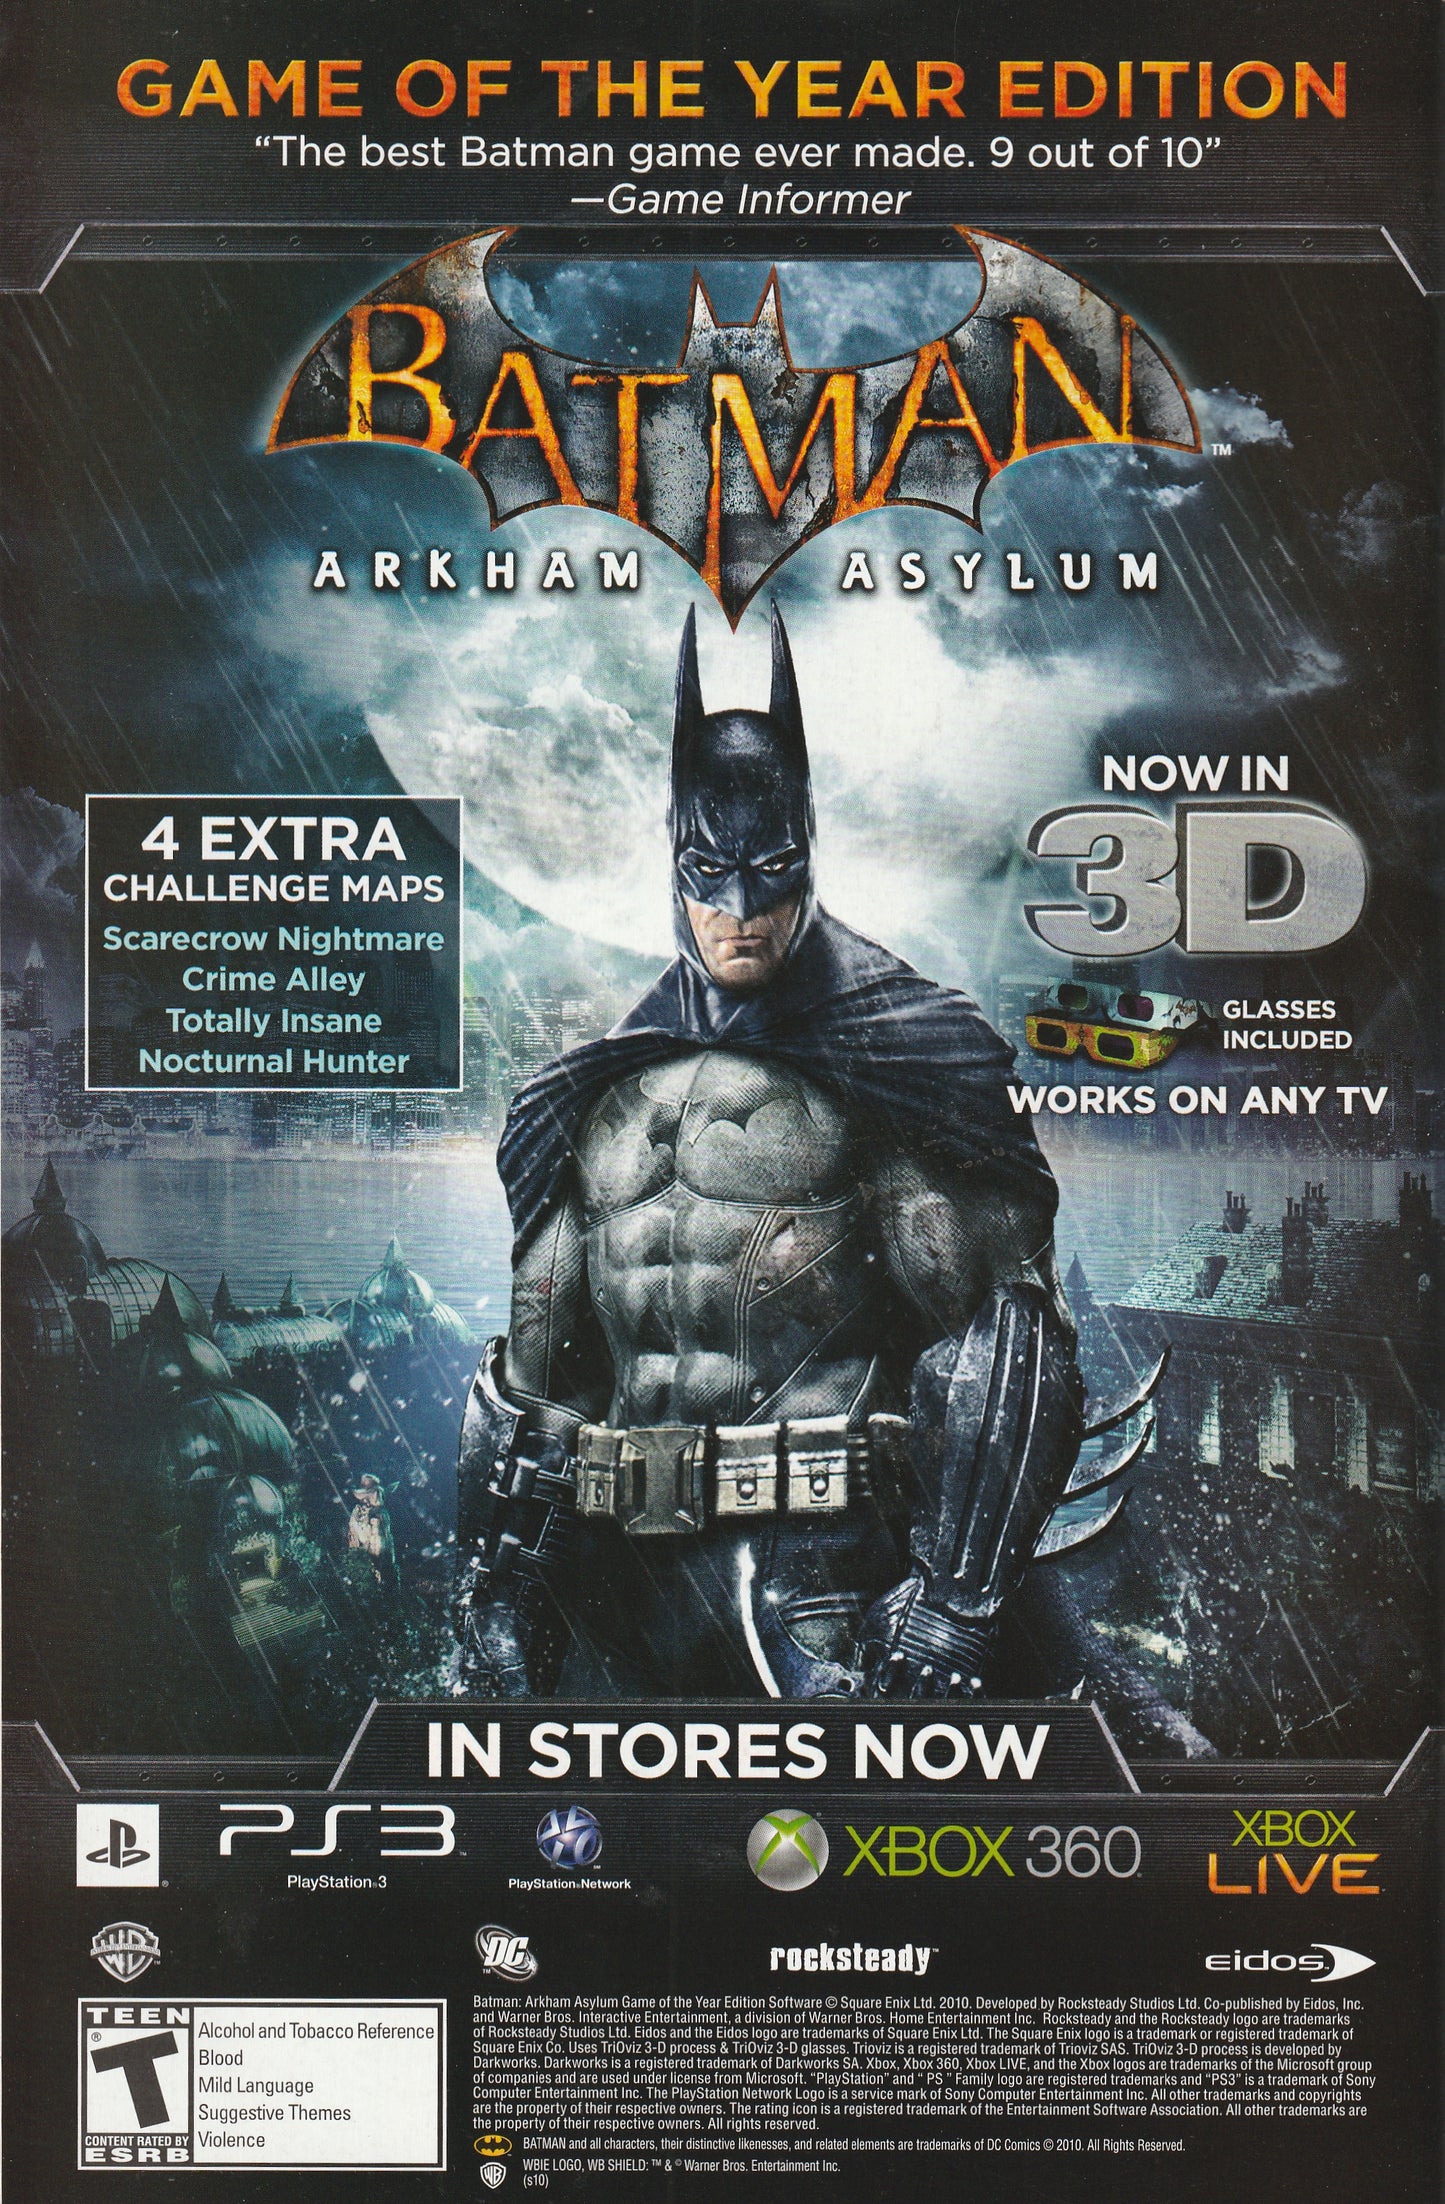 Batman Beyond #1 of 6 (2010) - Volume 3